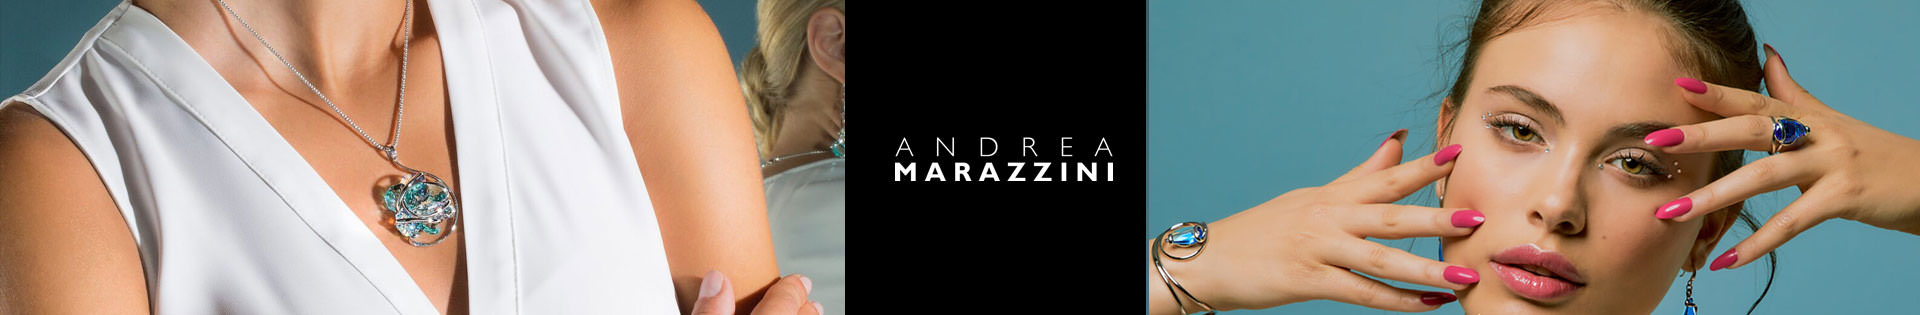 Bracelet - Andrea Marazzini